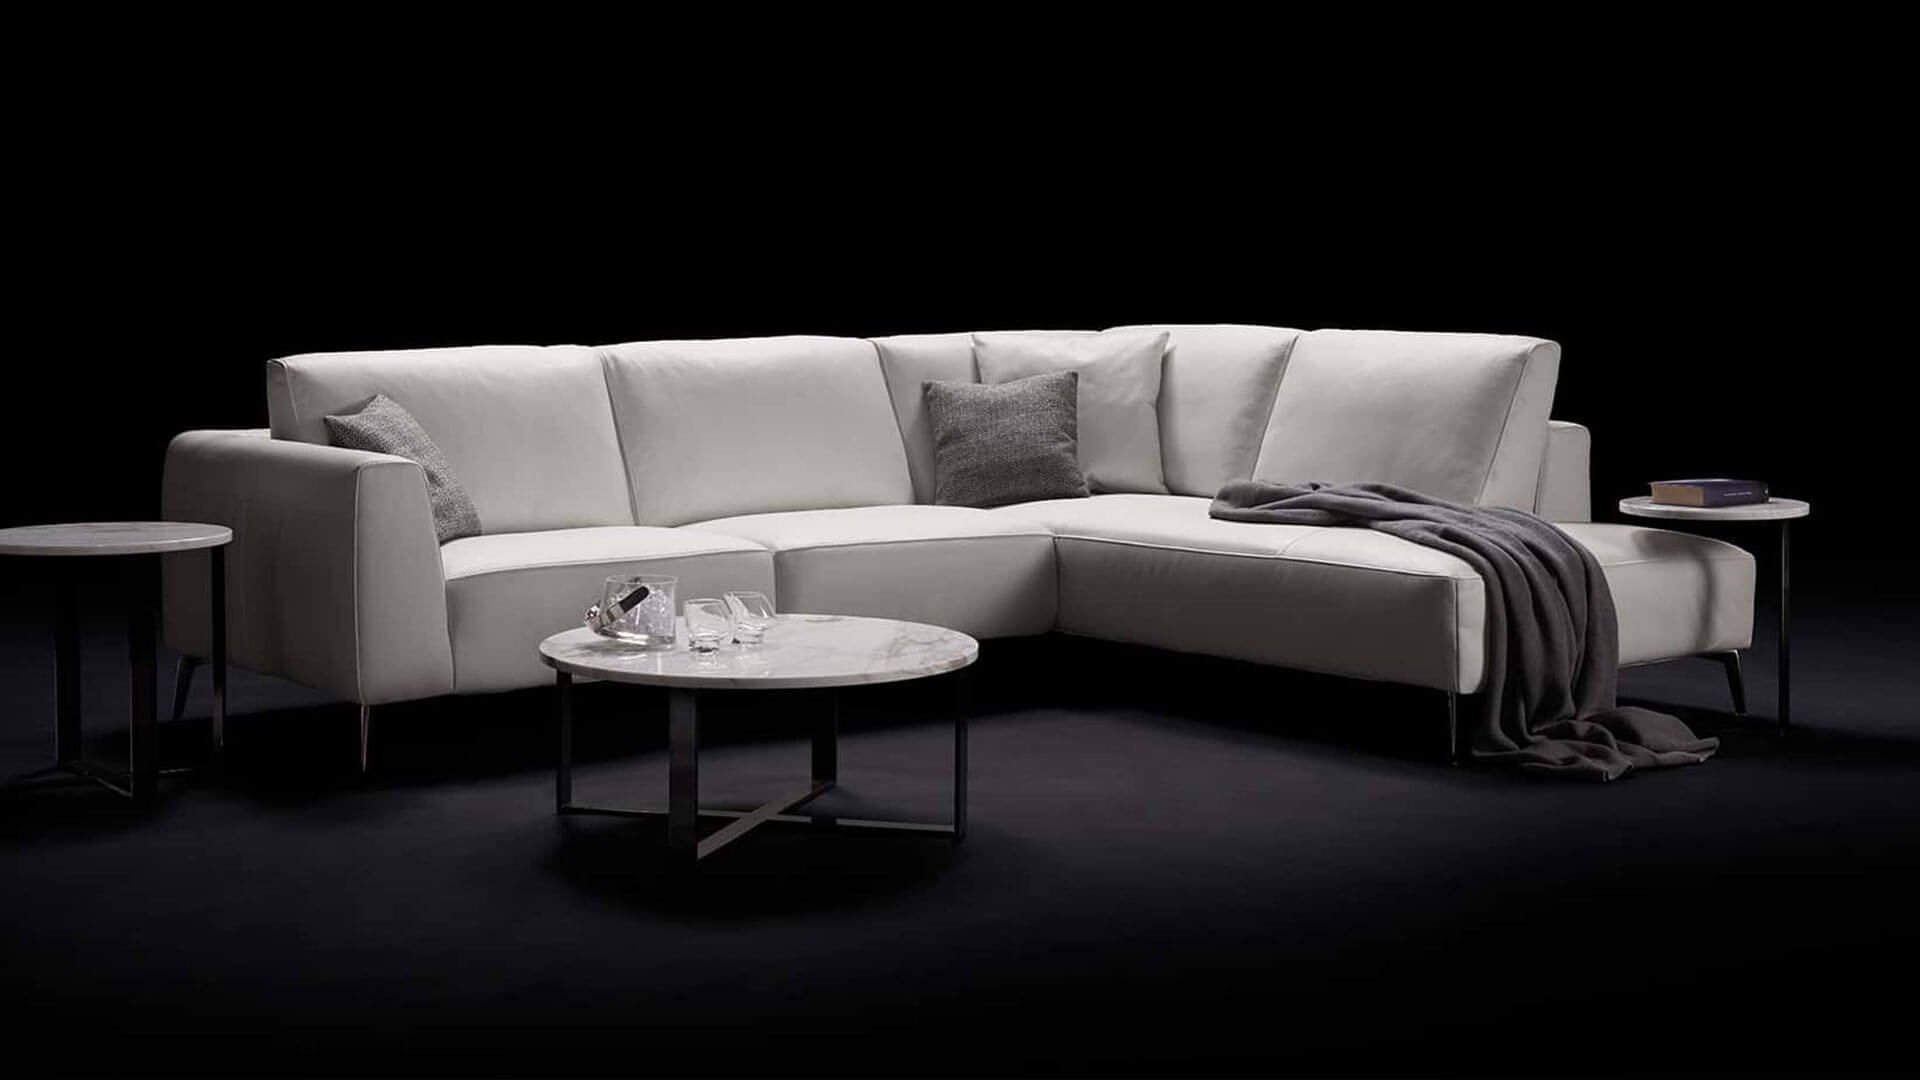 Blog IDW - Why choose a Rosini leather sofa